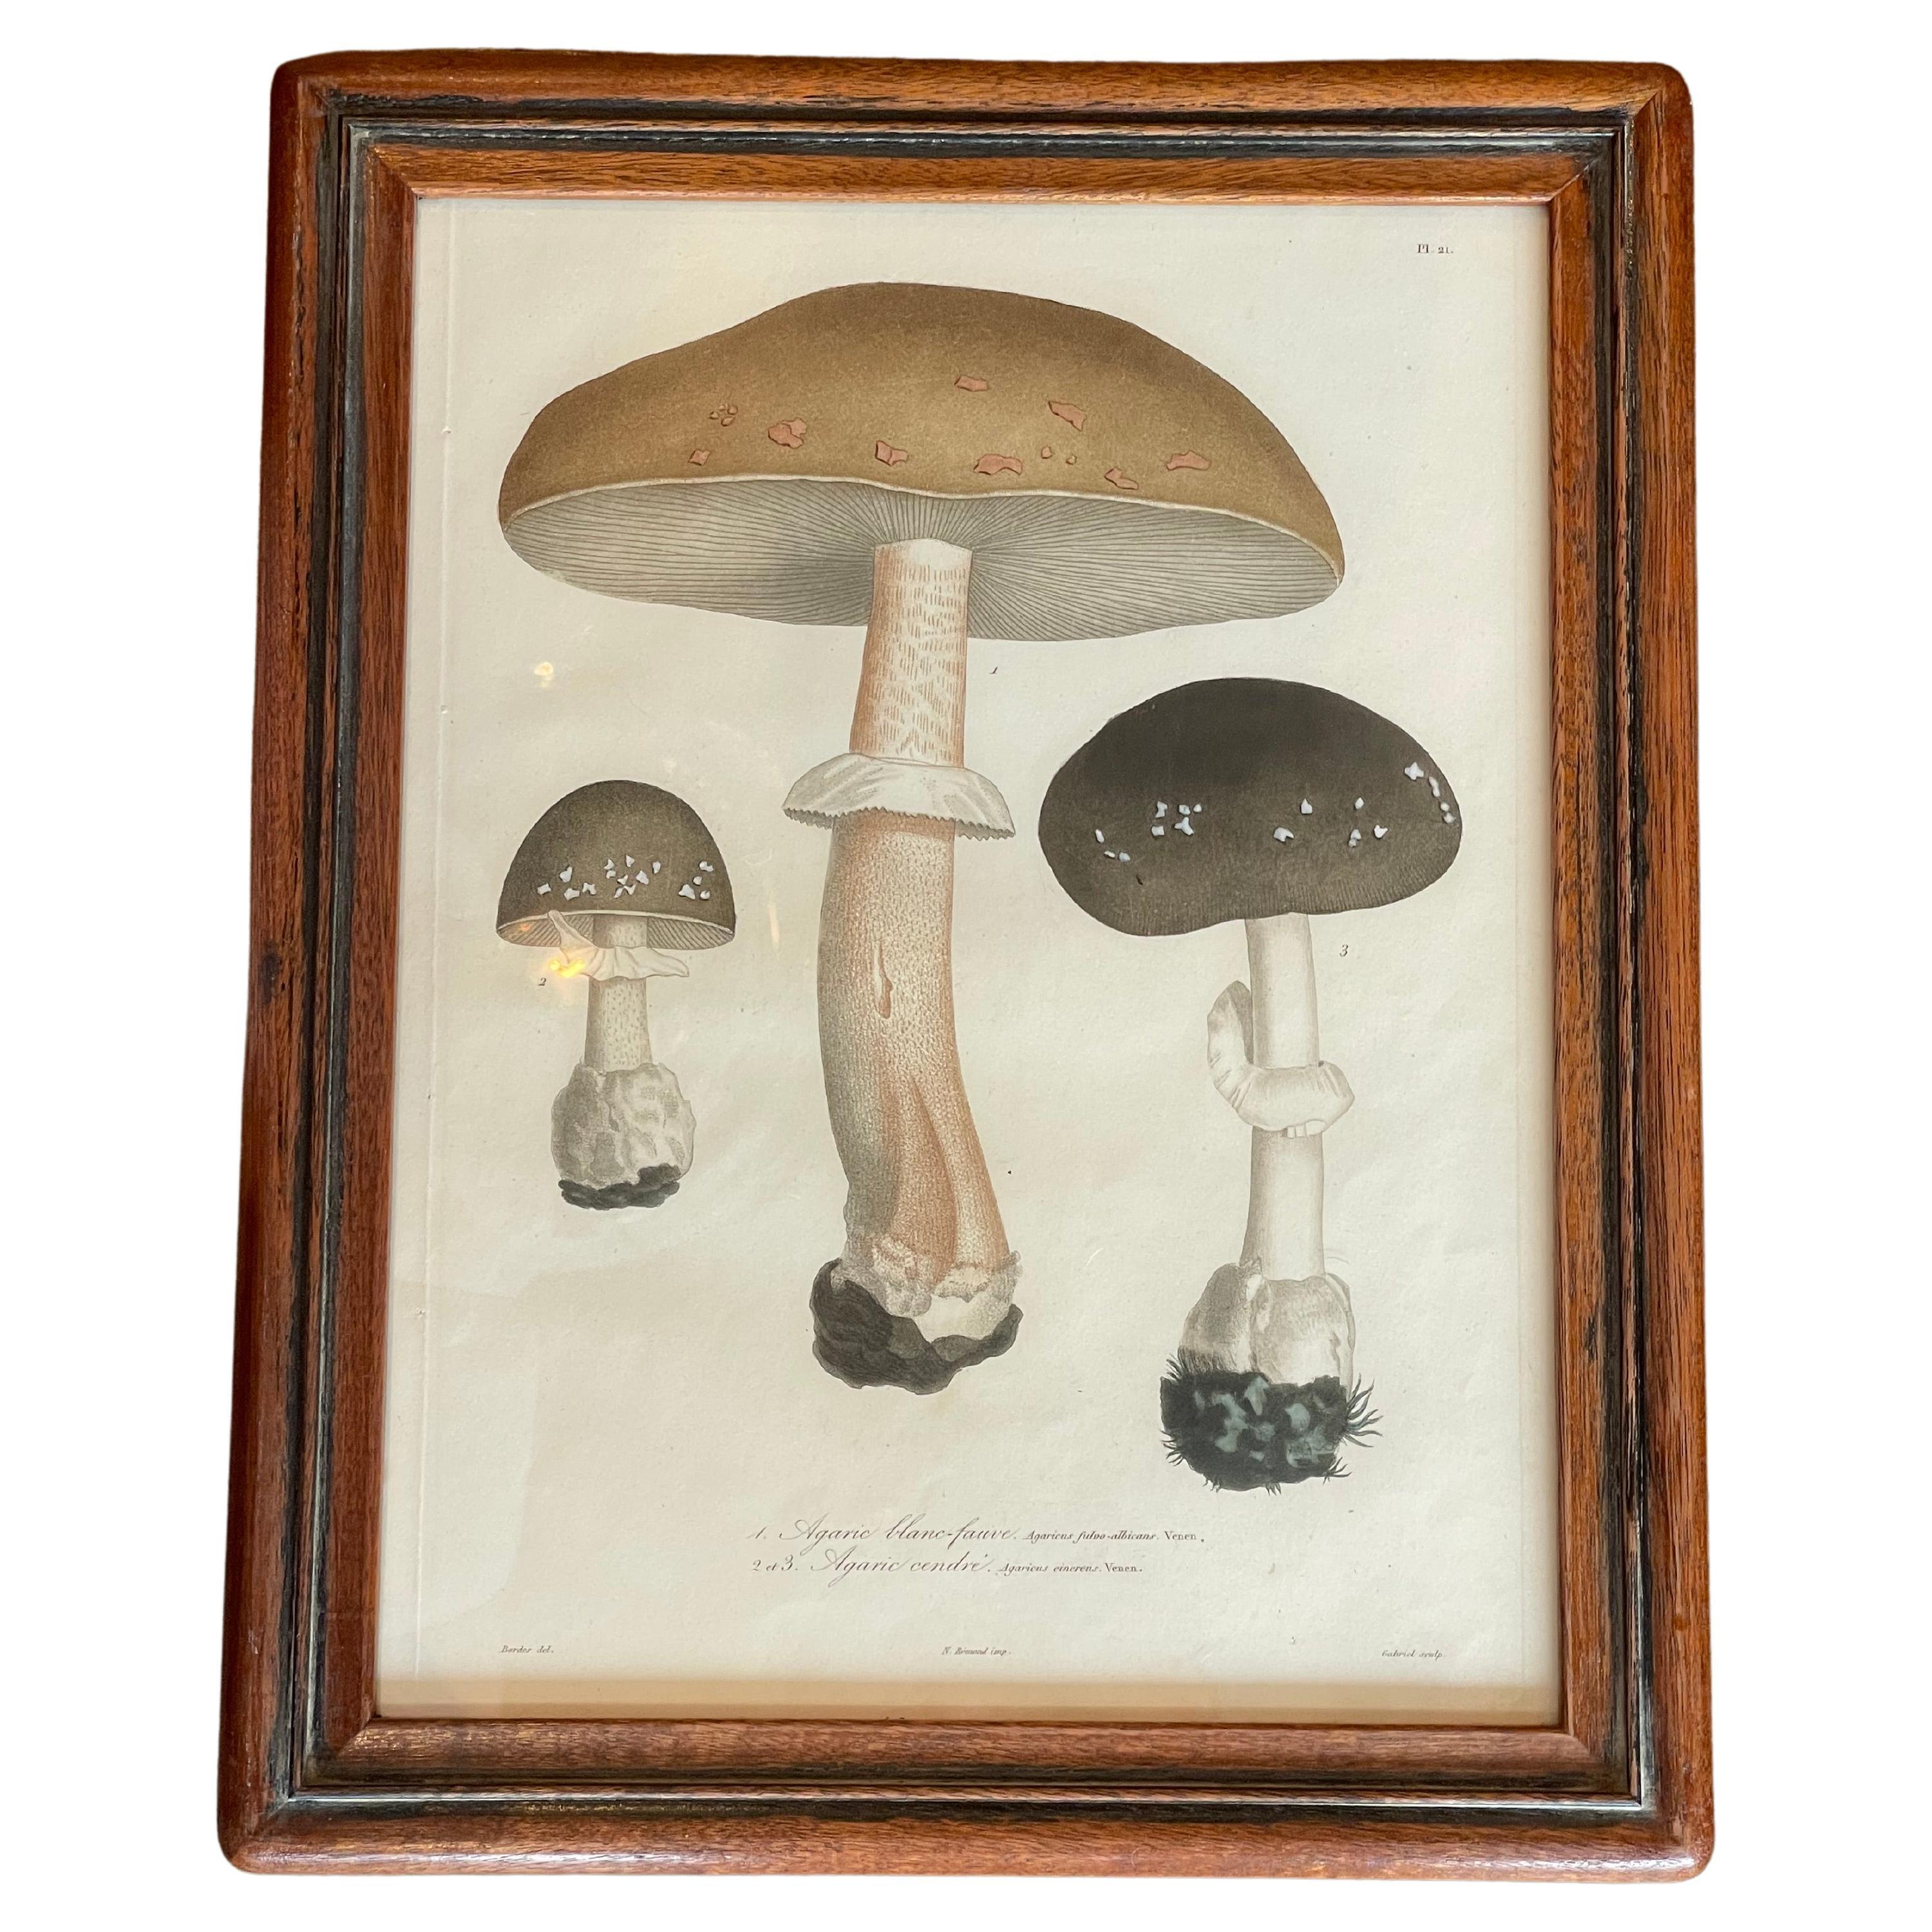 Set of Nine Mushroom Mezzo Prints by Joseph Roques
Sourced by Martyn Lawrence Bullard from England, Circa 1830
Encased in Original Walnut Frames